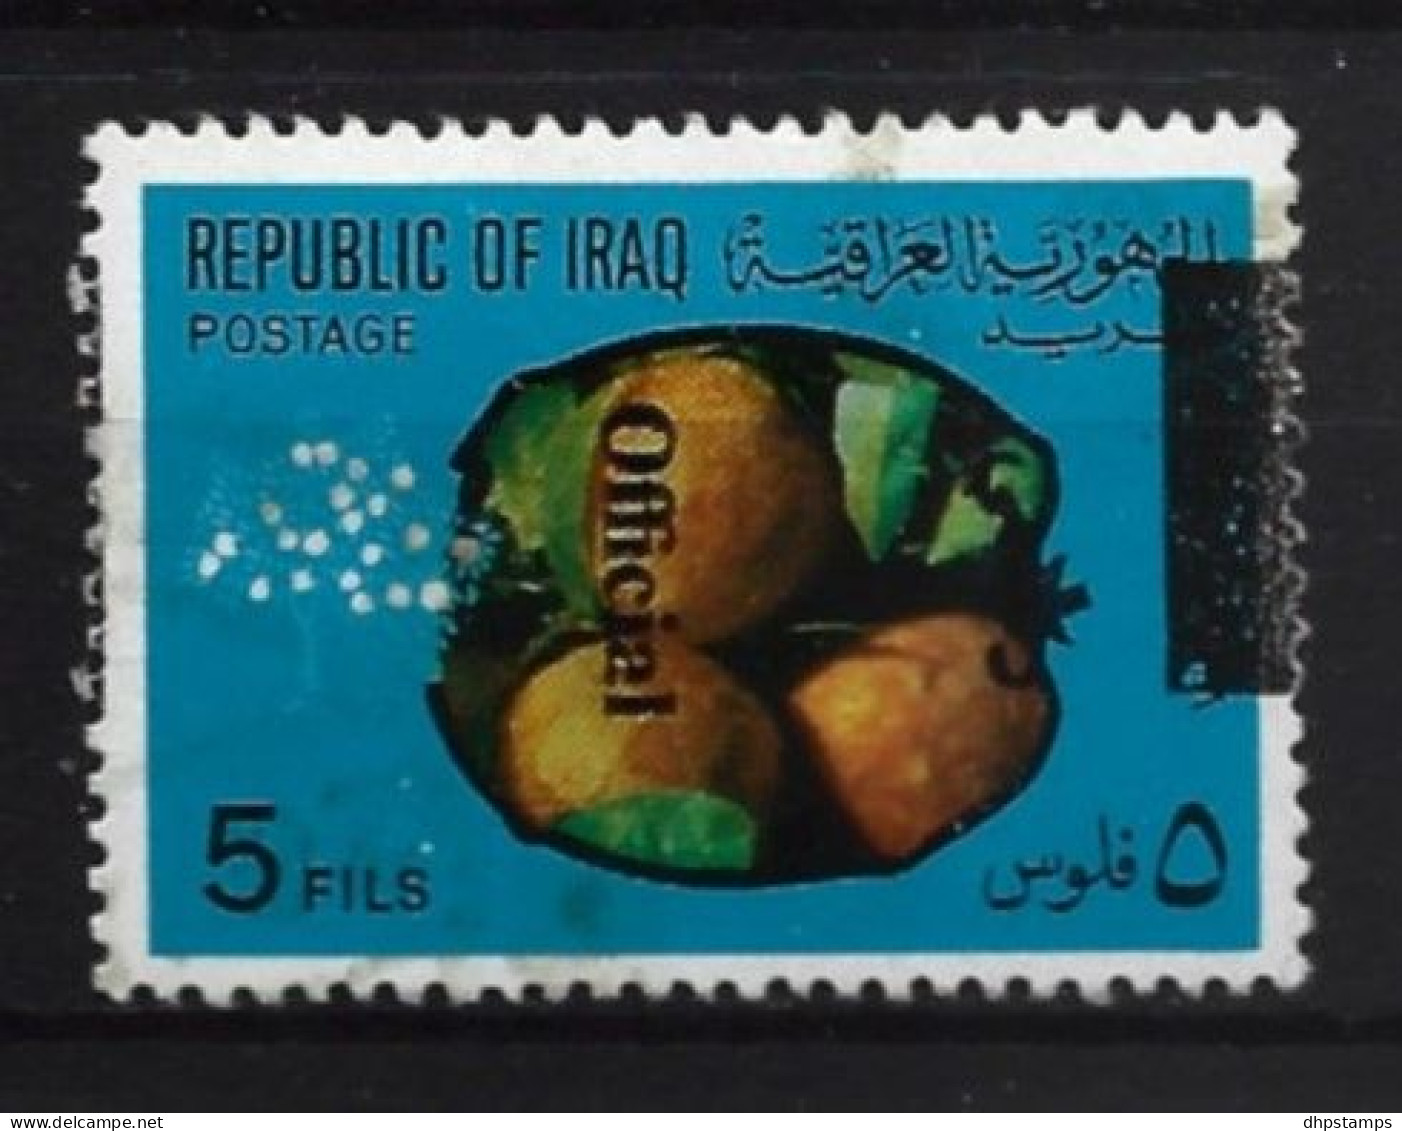 Irak 1973 Fruit Y.T. S242 (0) - Iraq